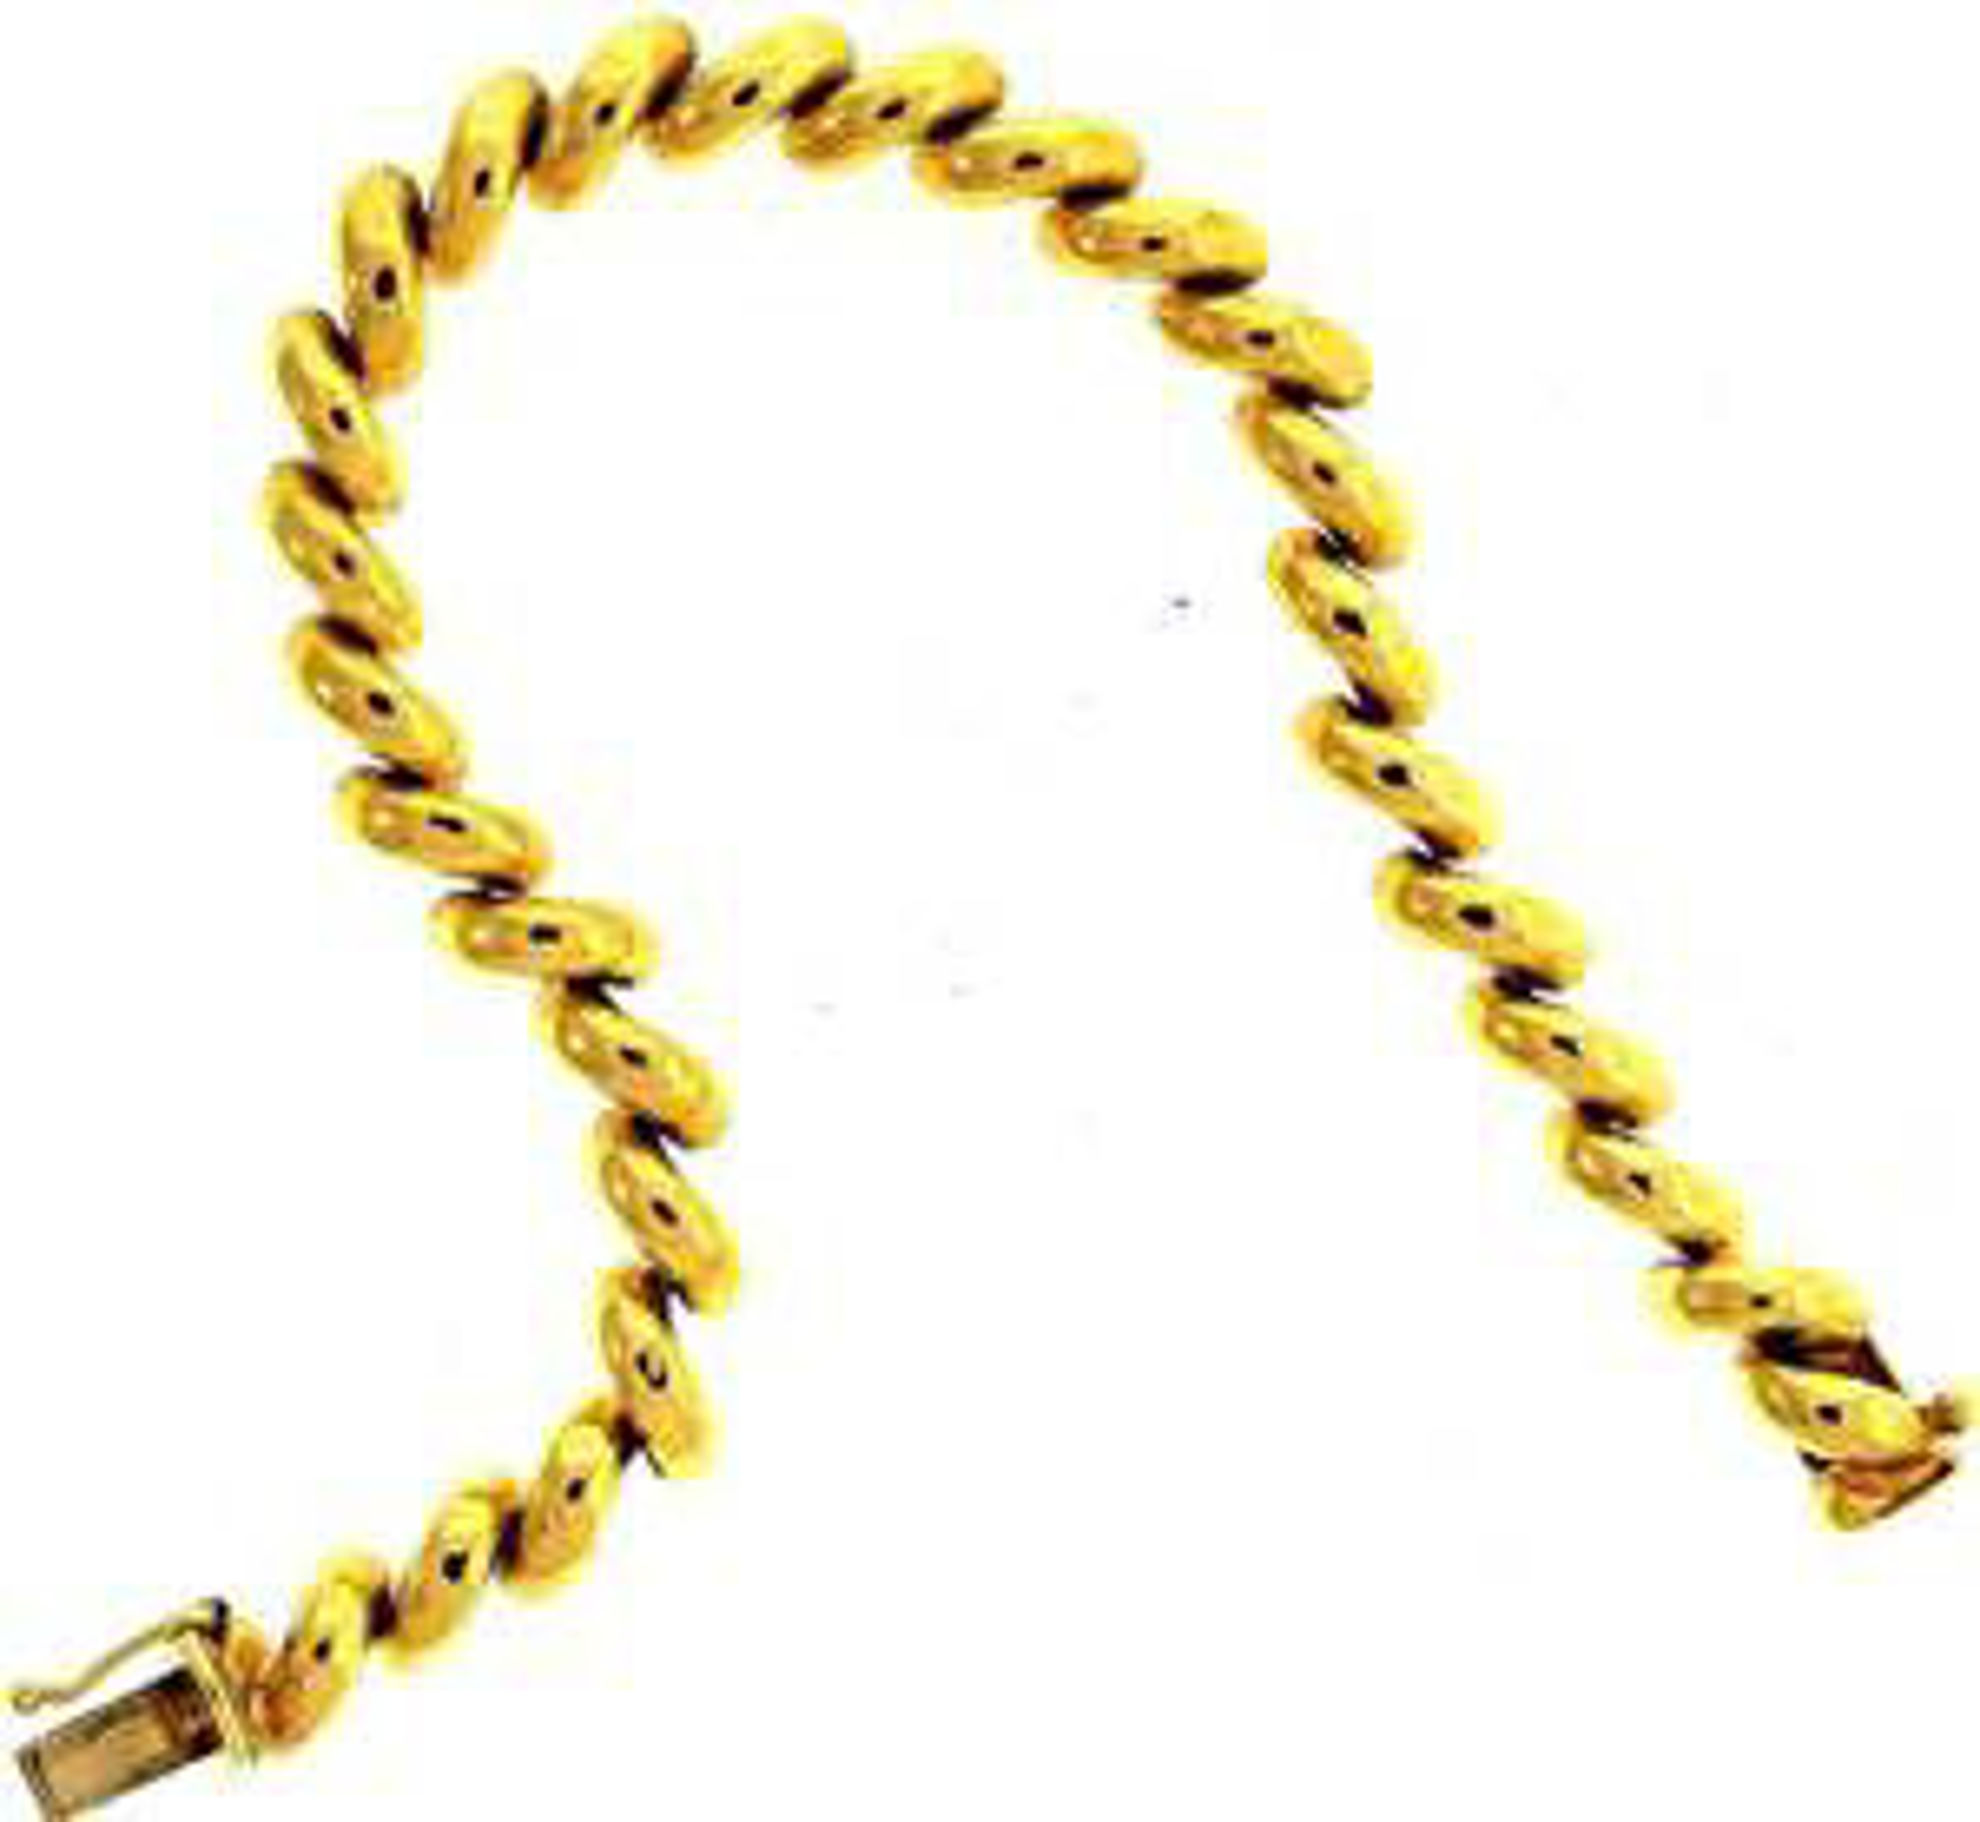 Picture of Bracelets 10kt-8.7 DWT, 13.5 Grams